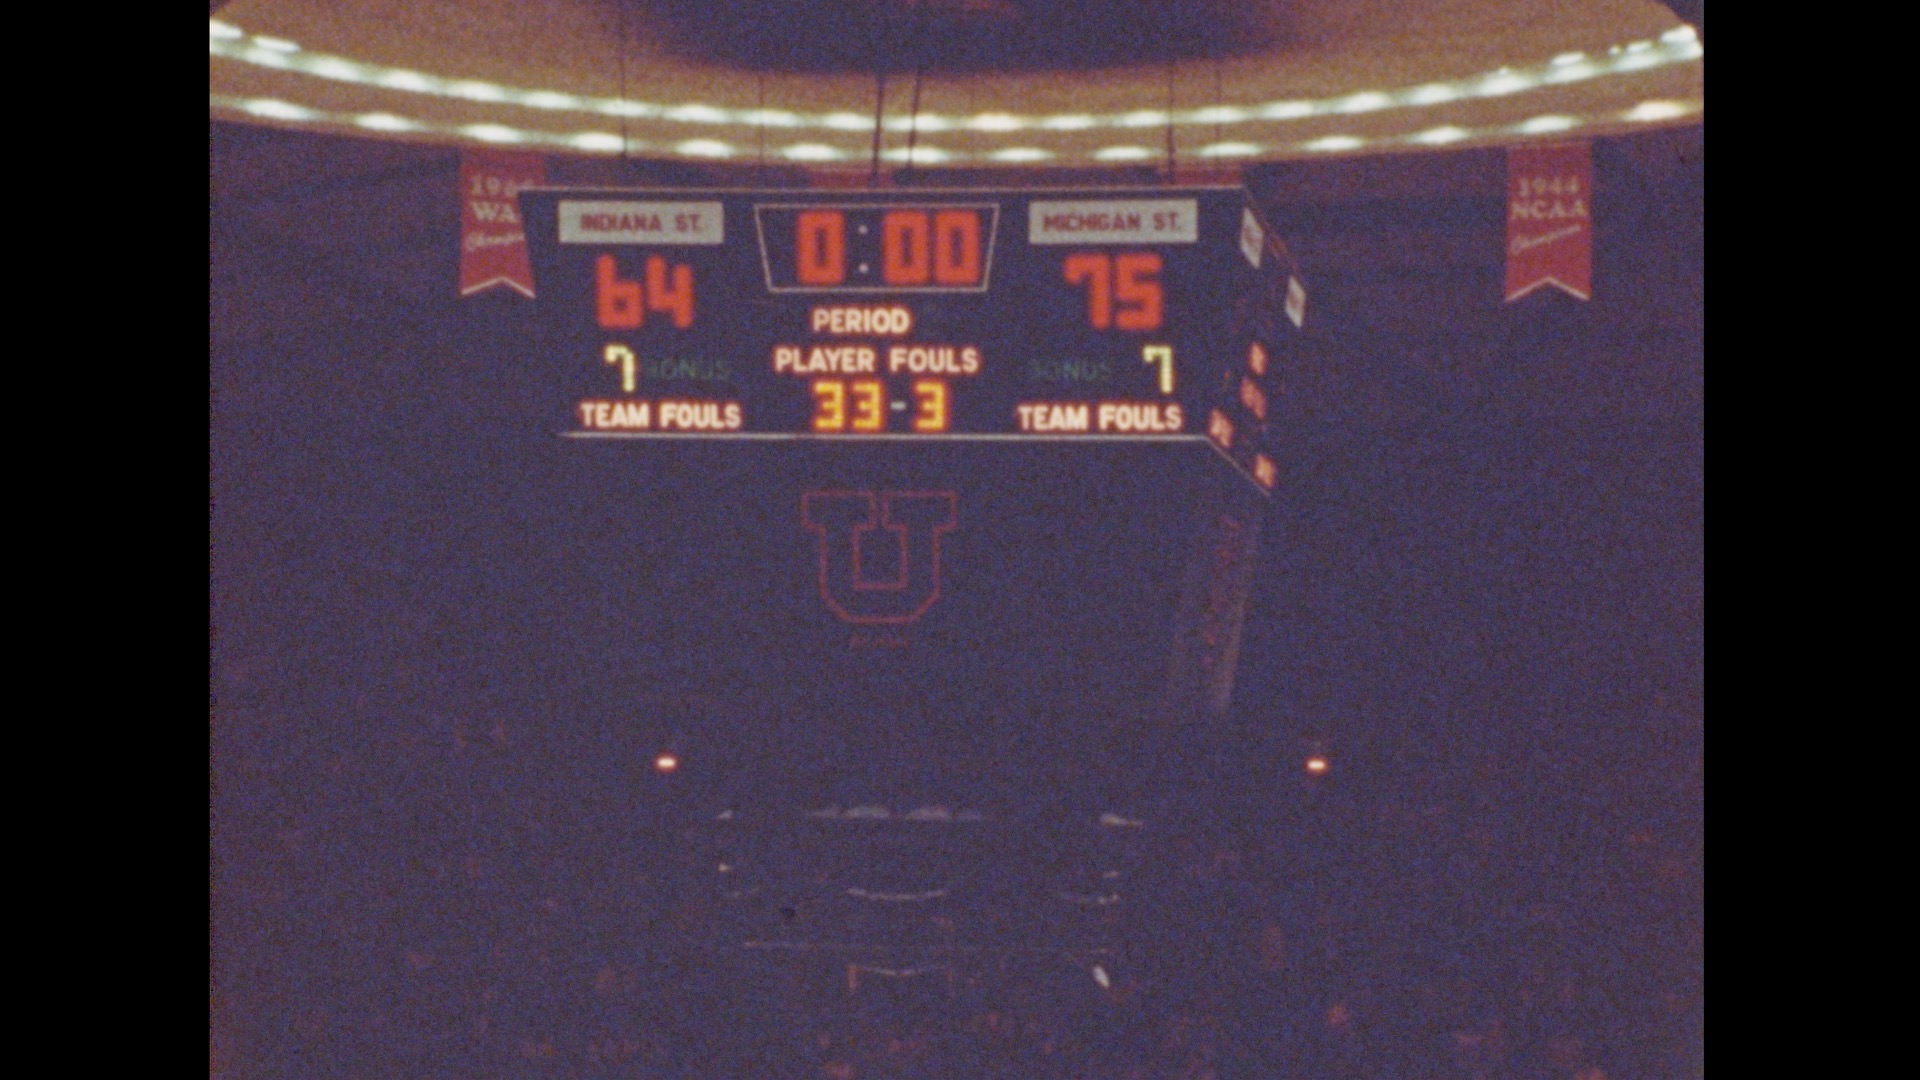 MSU Basketball vs. Indiana State, NCAA Men's Division I National Championship, 1979 (reels 1-3)